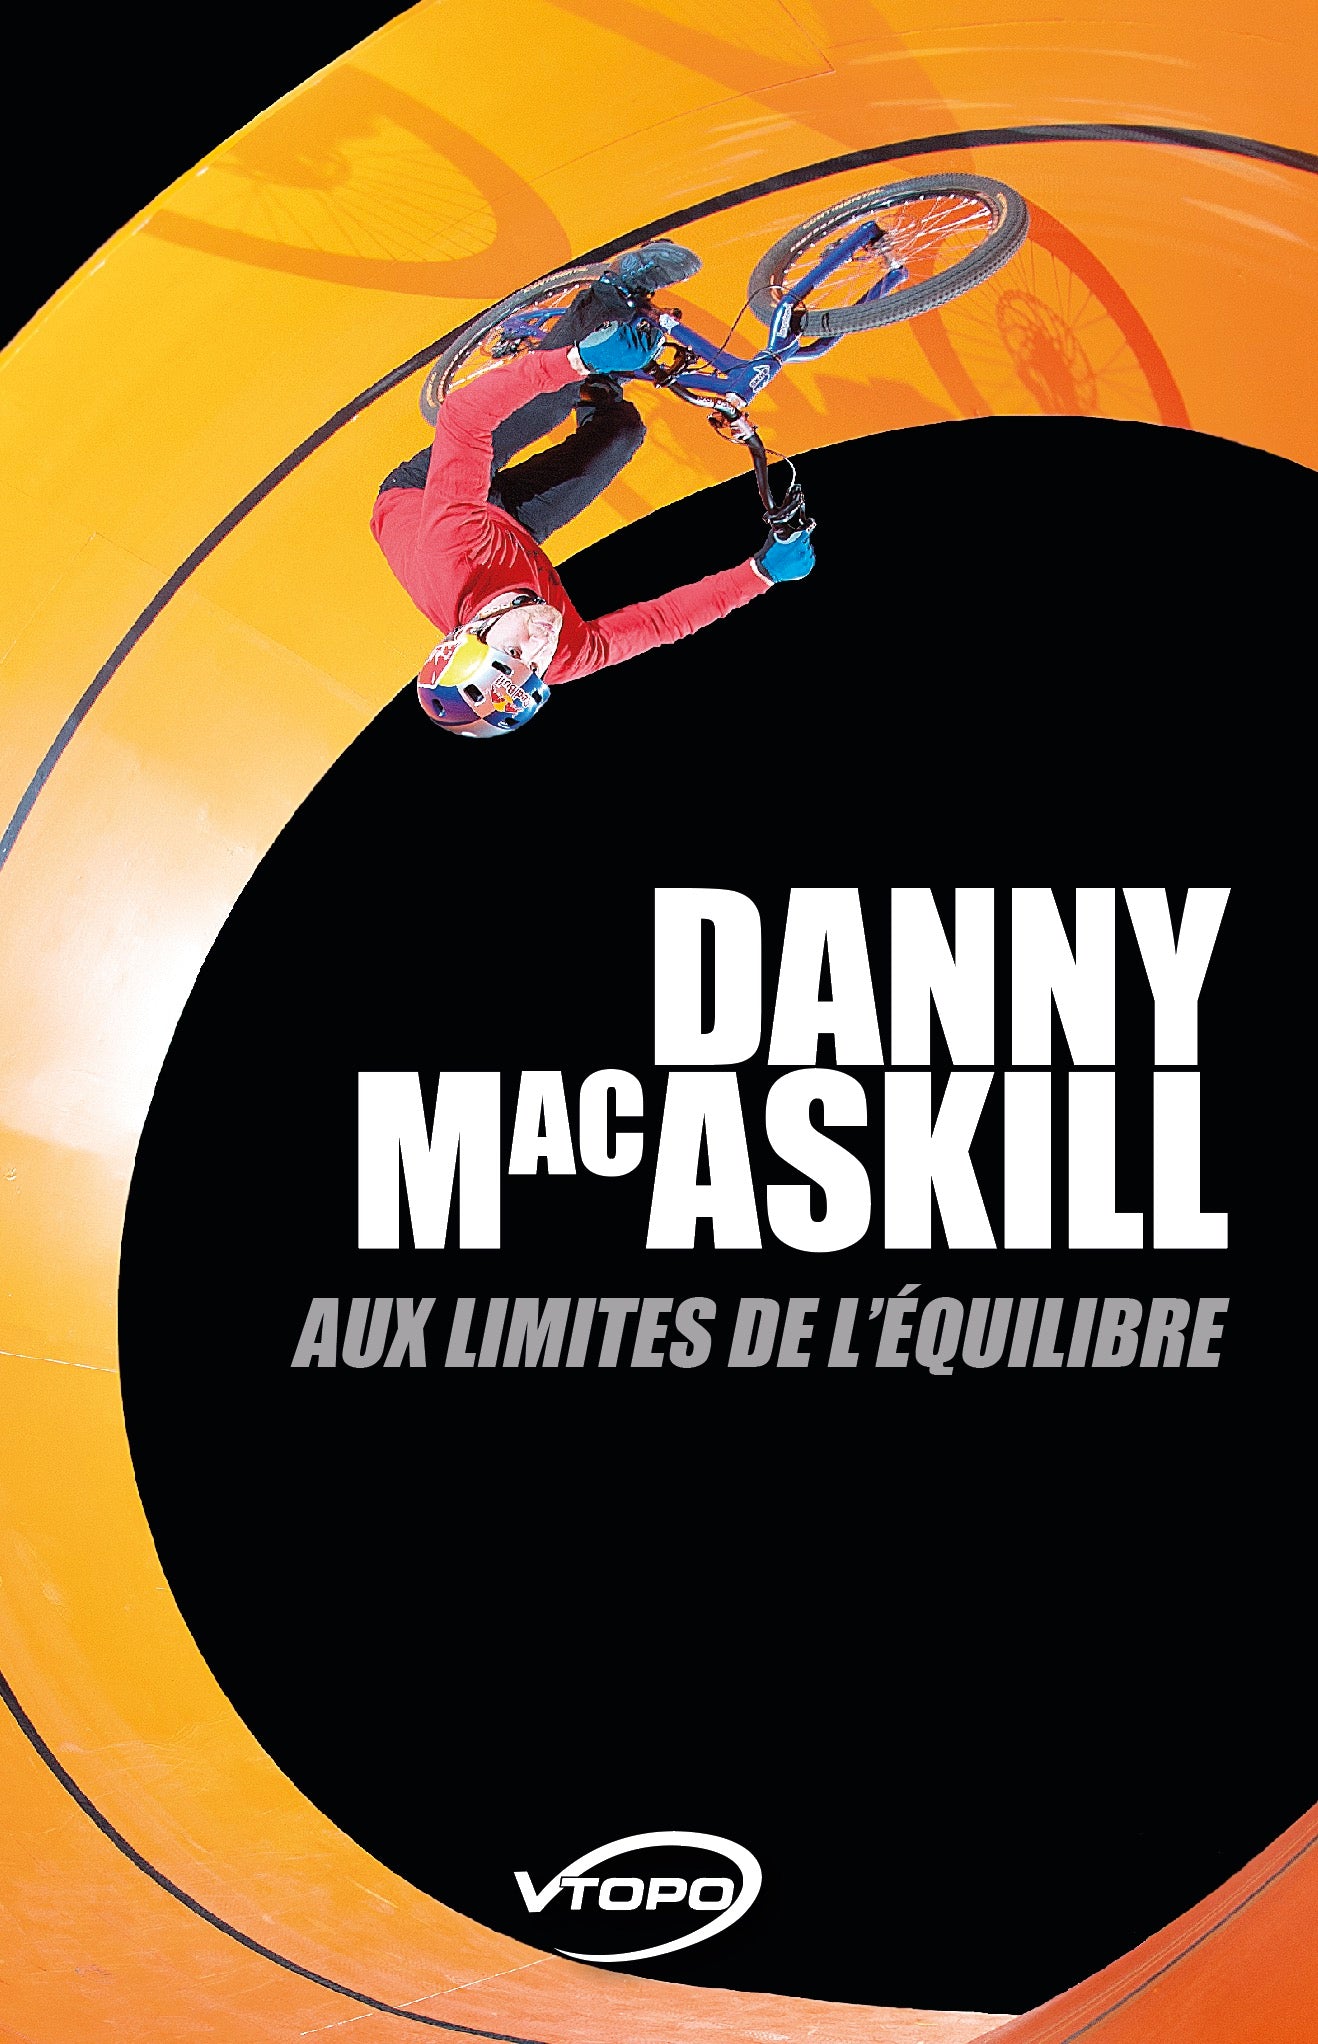 DANNY MACASKILL - On the Edge of Balance